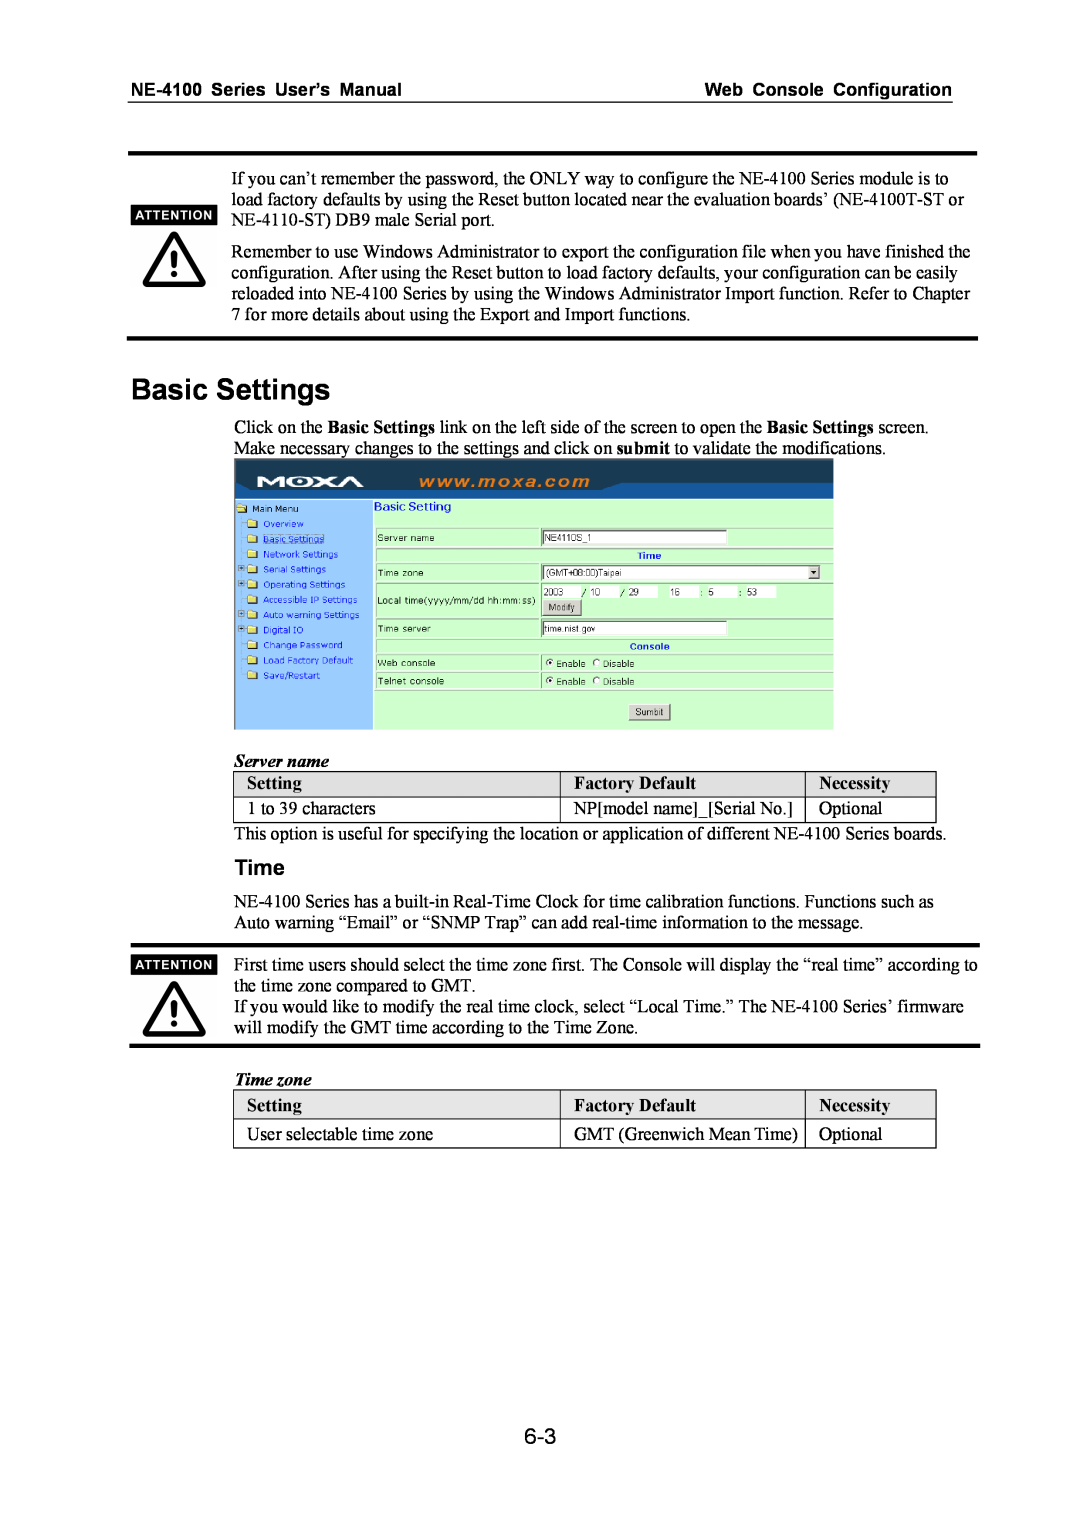 Moxa Technologies Basic Settings, NE-4100 Series User’s Manual, Web Console Configuration, Server name, Time zone 